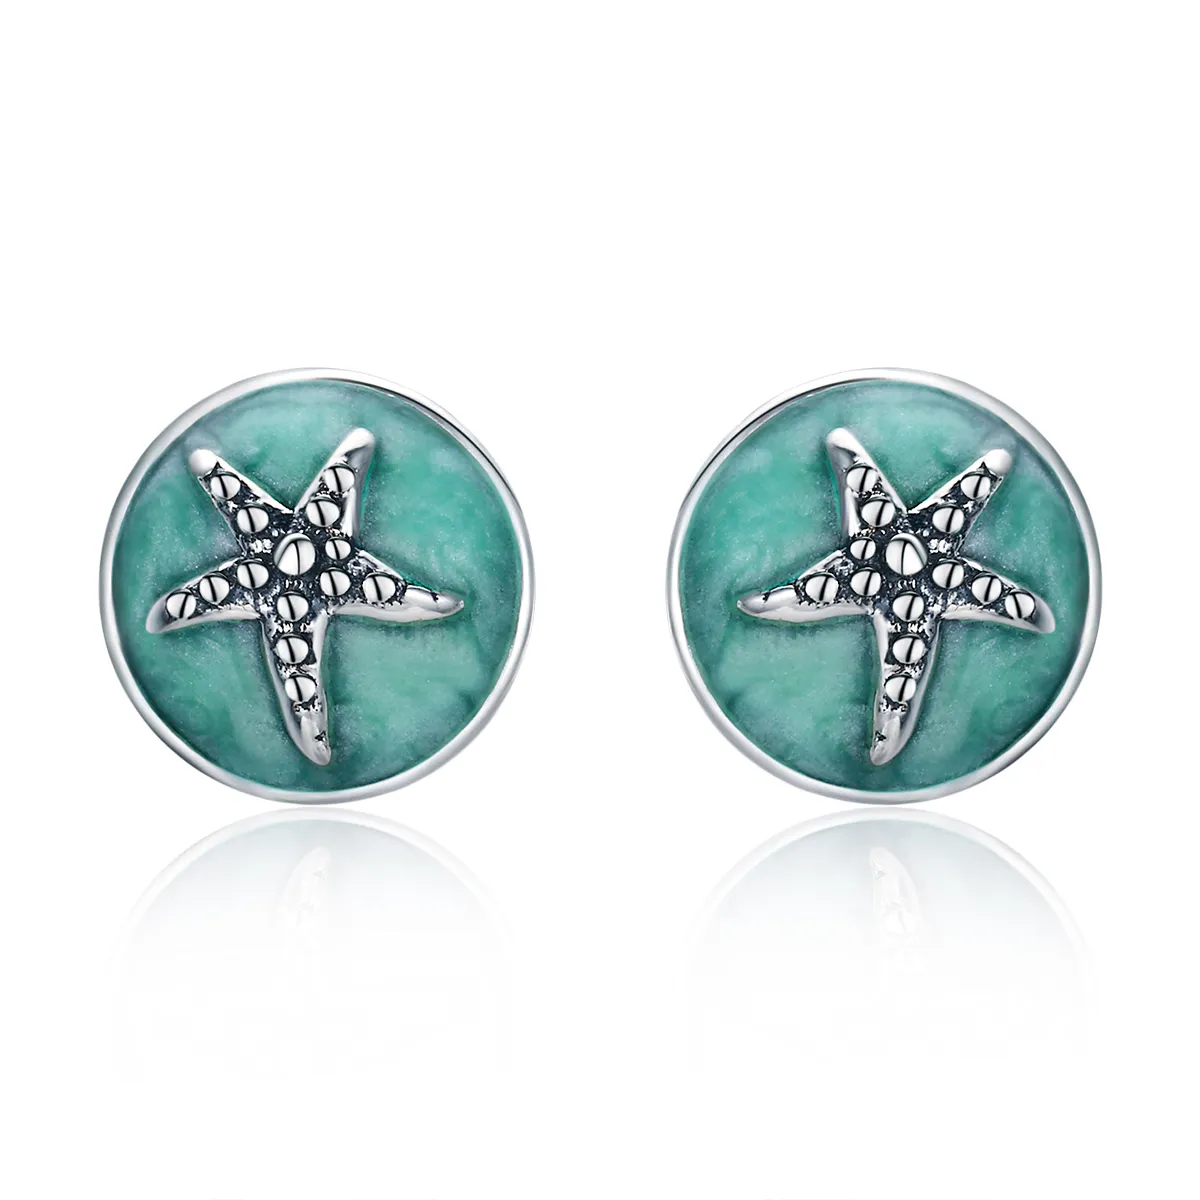 Pandora Style Silver Fantasy Starfish Stud Earrings - SCE205